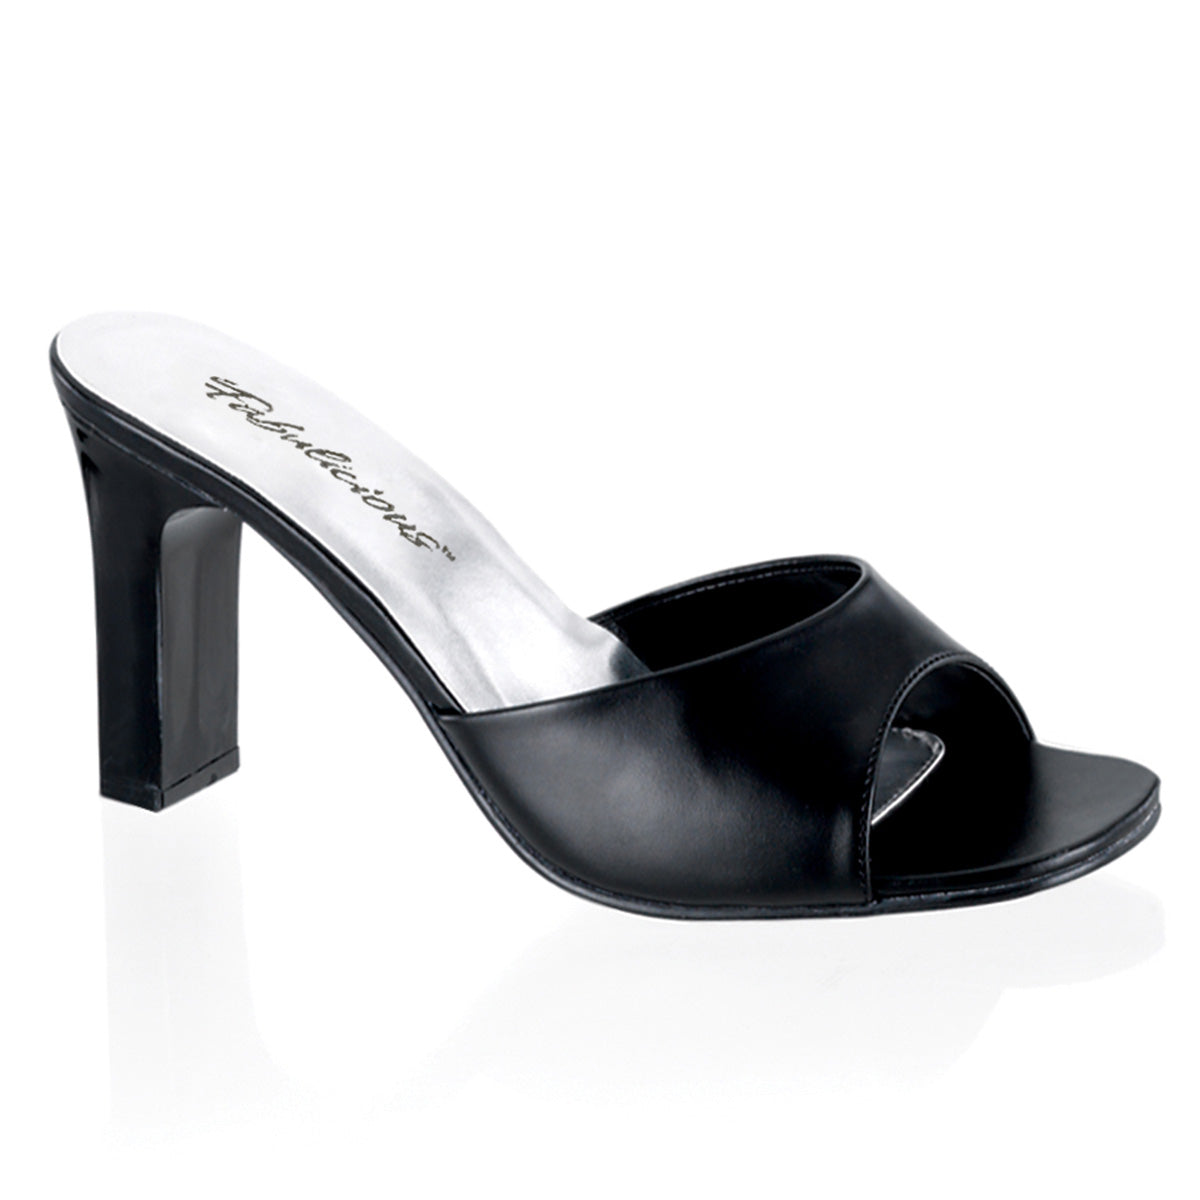 ROMANCE-301-2 Fabulicious 3 Inch Heel Black Slip On Sexy Shoes